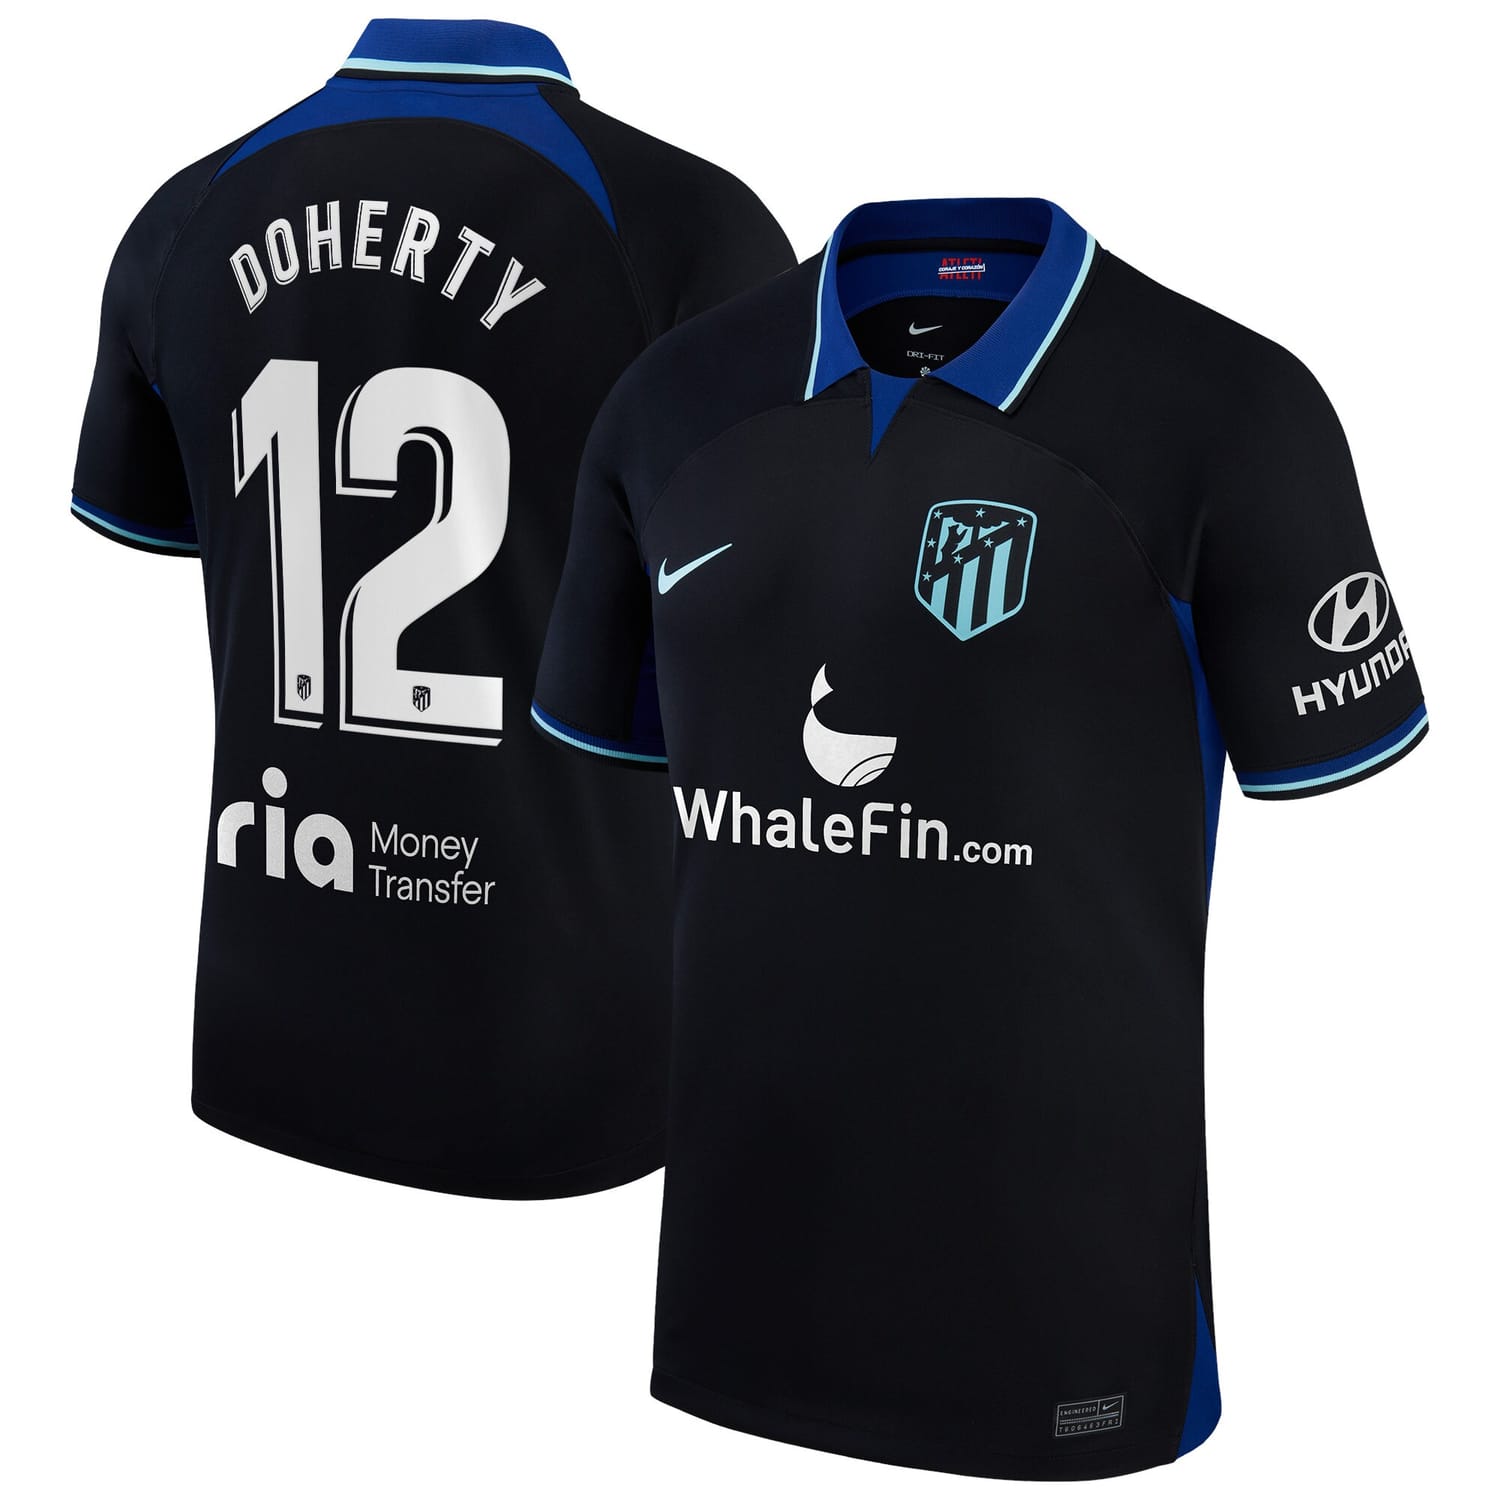 La Liga Atletico de Madrid Away Jersey Shirt 2022-23 player Matt Doherty 12 printing for Men